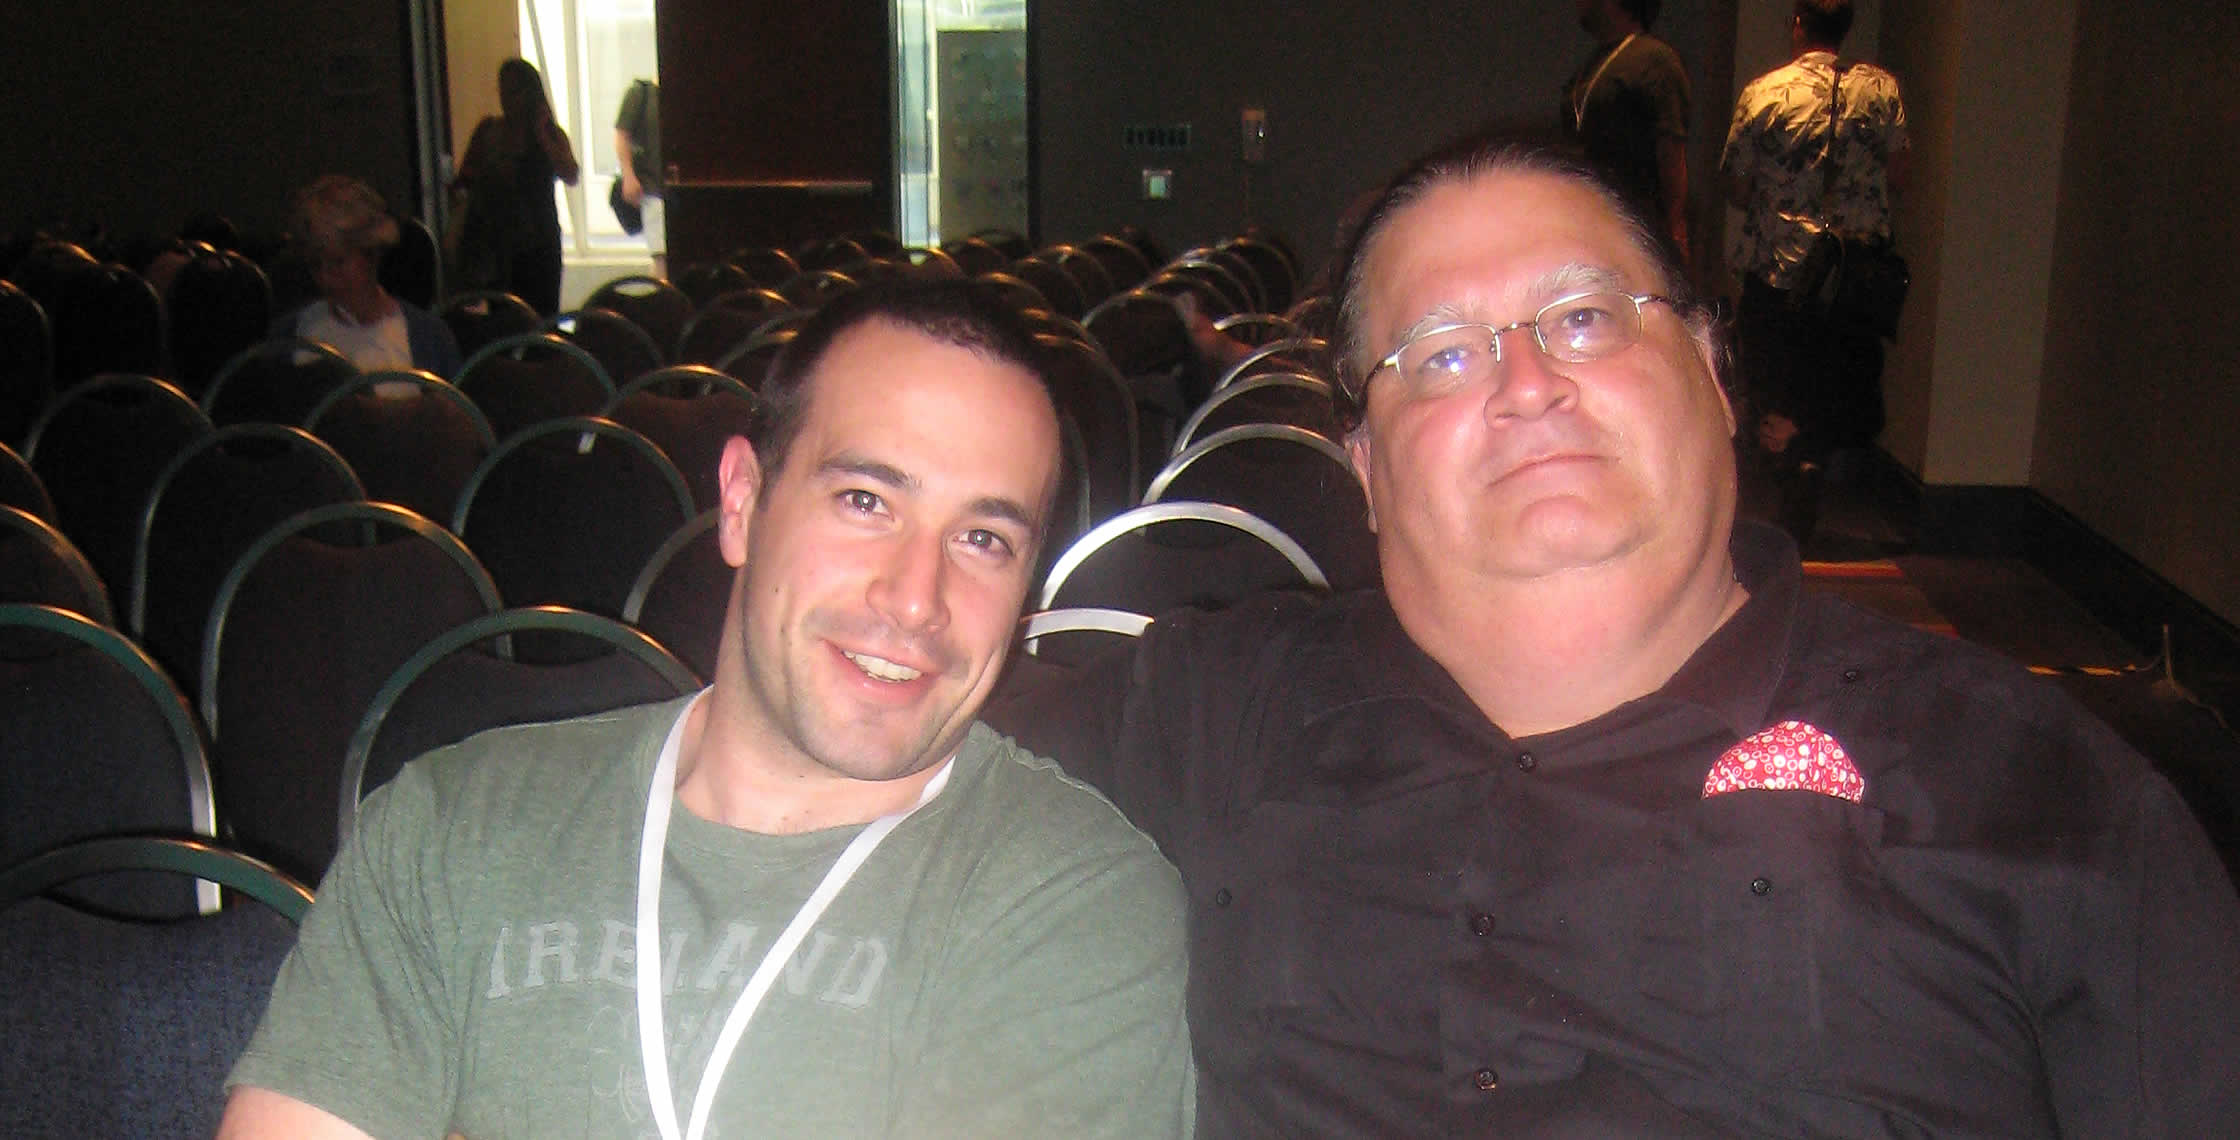 Ben Nadel at CFUNITED 2008 (Washington, D.C.) with: Hal Helms